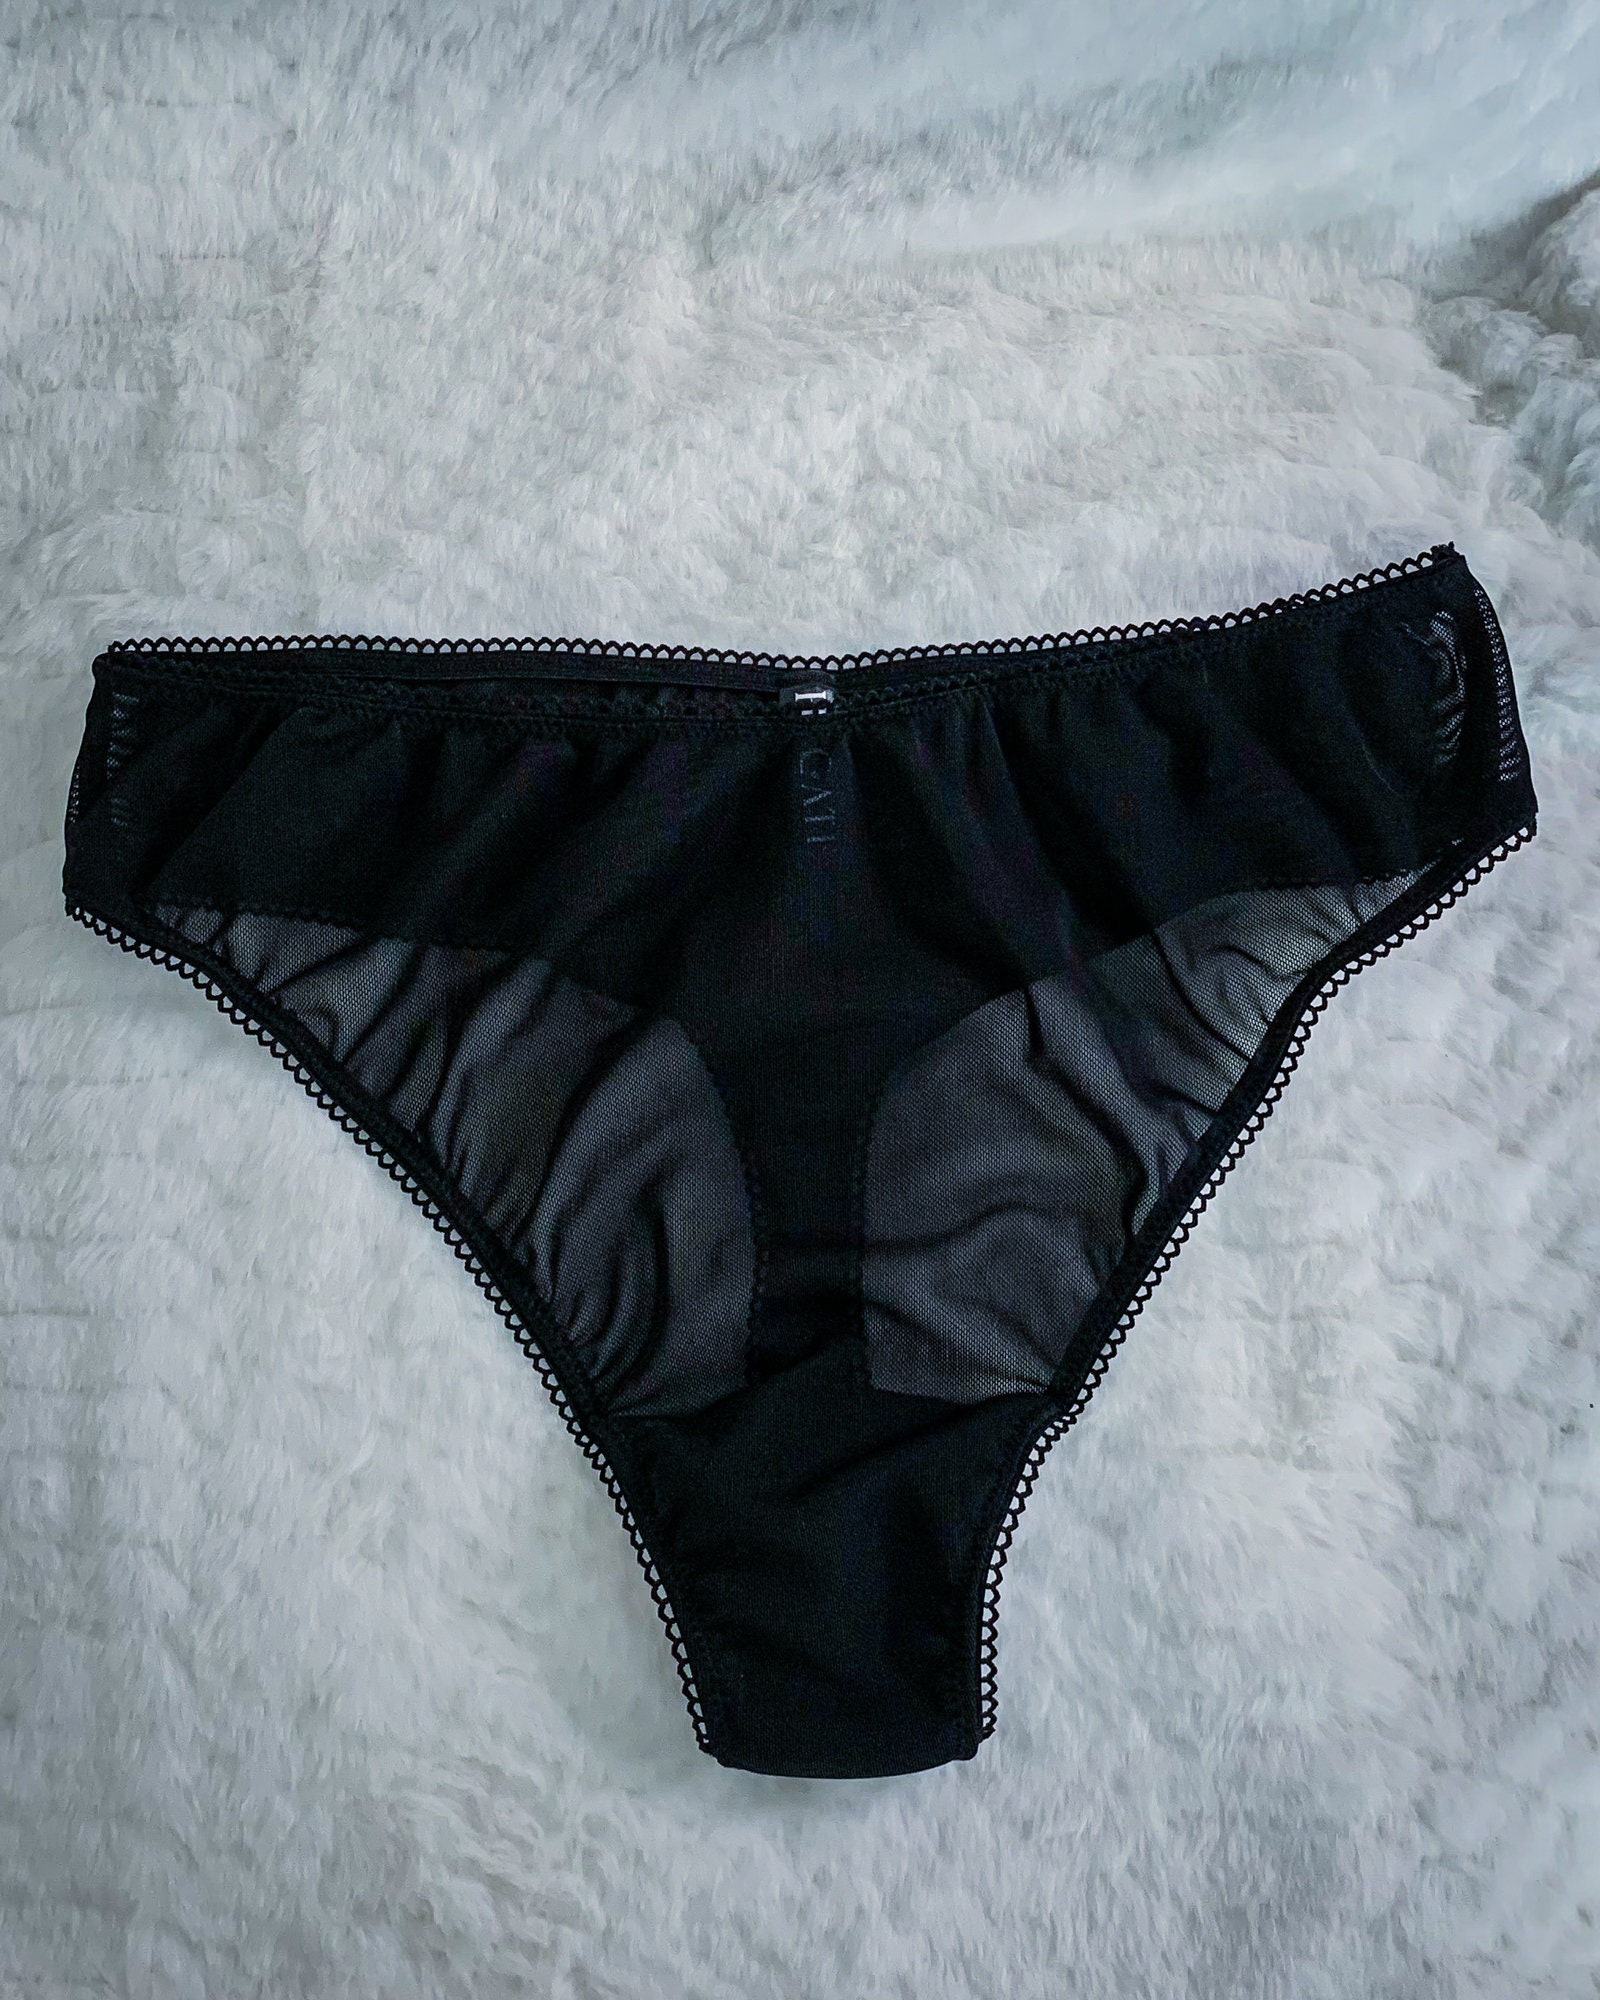 Plus Size Underwear High-waisted, High-leg Black Cotton Thong